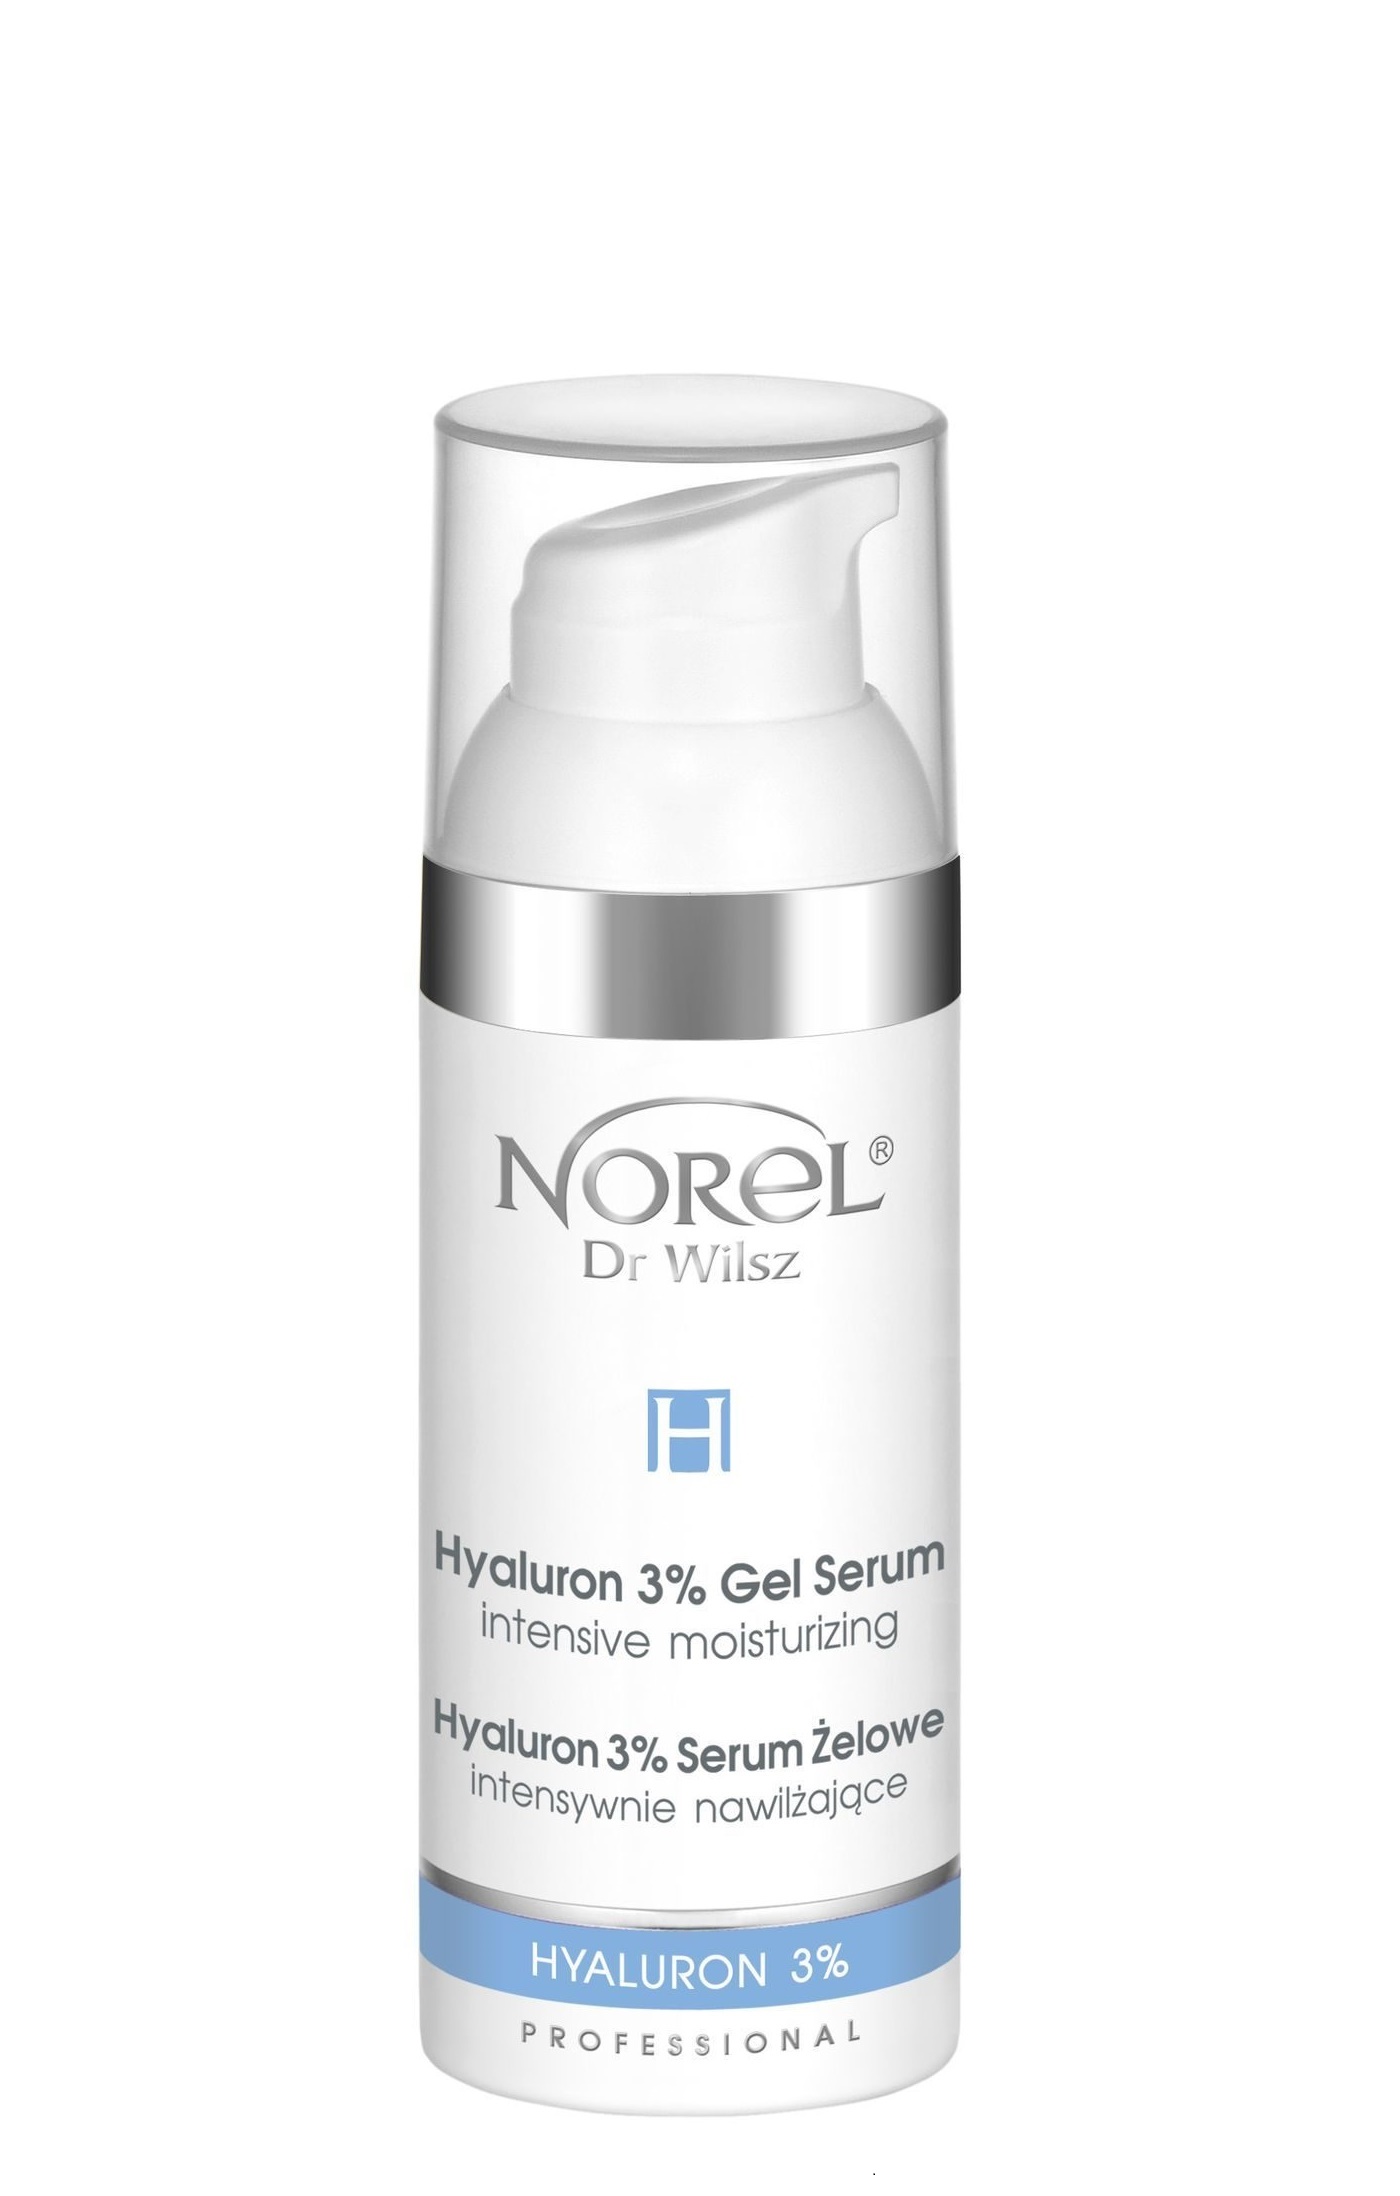 Norel Hyaluron 3% Gel Serum-Intensive Moisturizing. Norel Dr Wilsz очищающее молочко Hyaluron Plus. Сыворотка увлажняющая (50 мл). Concentrate интенсивная сыворотка гиалуроновая. Gel serum